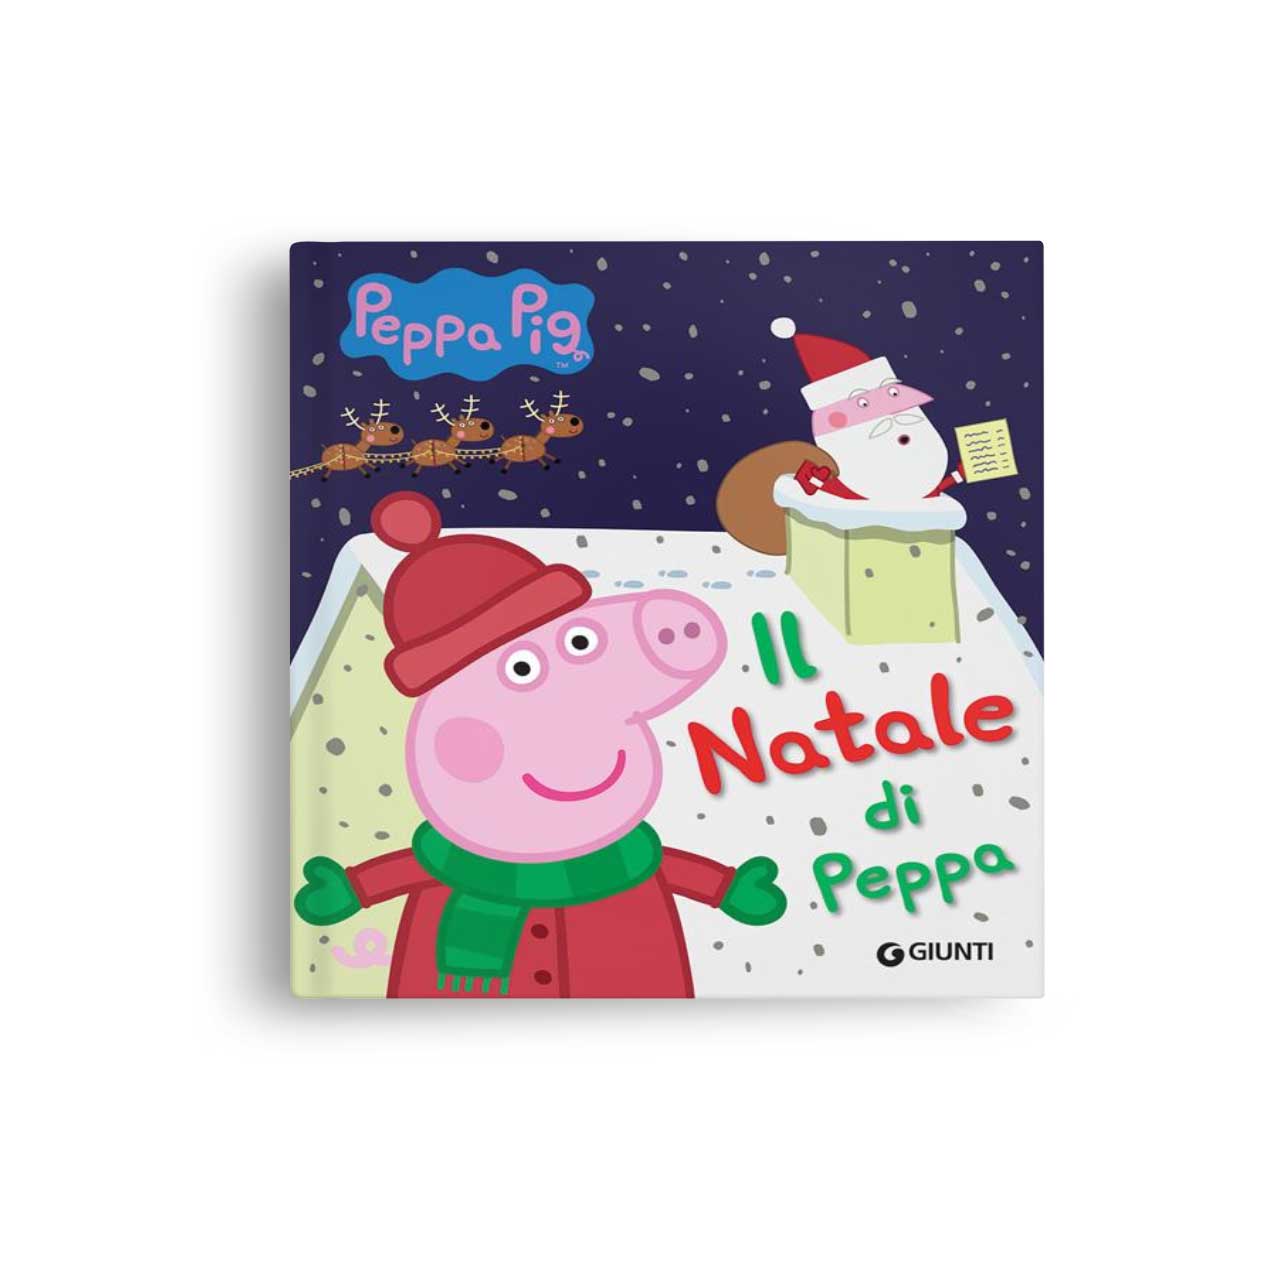 Peppa Pig Il Natale di Peppa | Italienische Kinderbücher